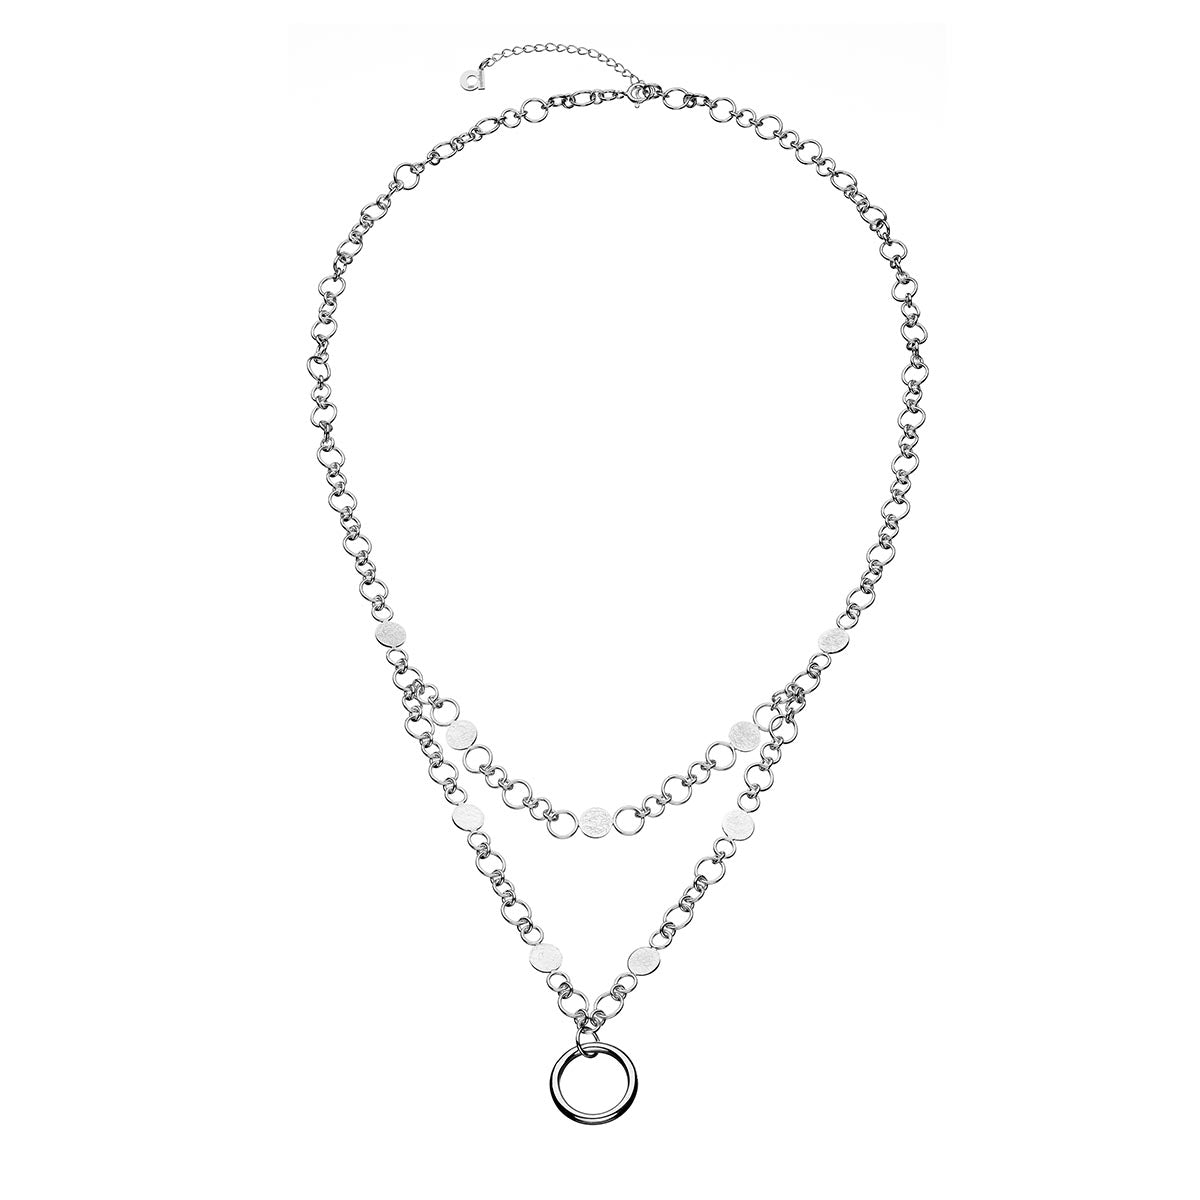 Mandartania necklace long, silver